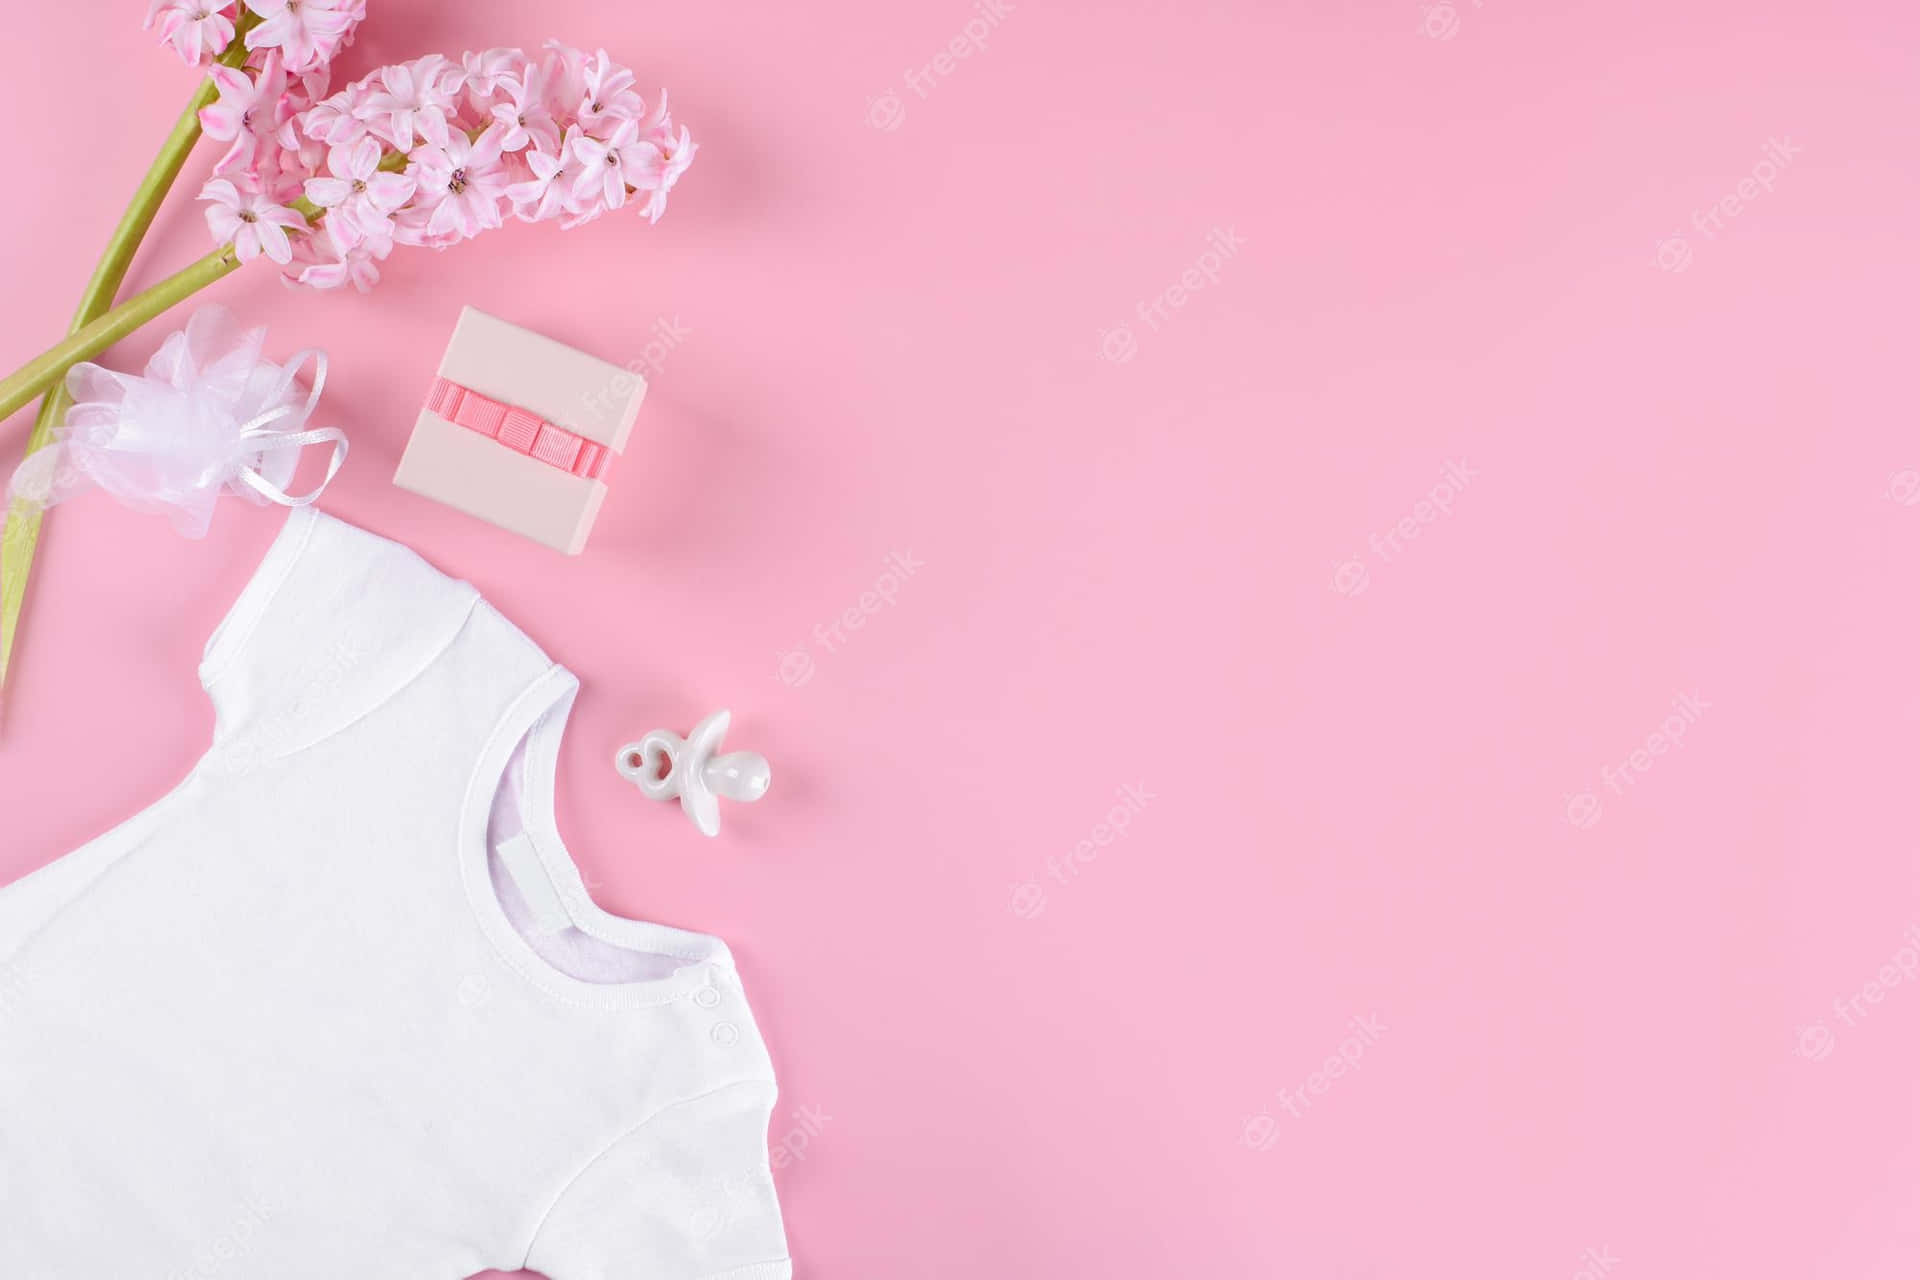 Unbody Blanco De Bebé Sobre Un Fondo Rosa Con Flores Fondo de pantalla